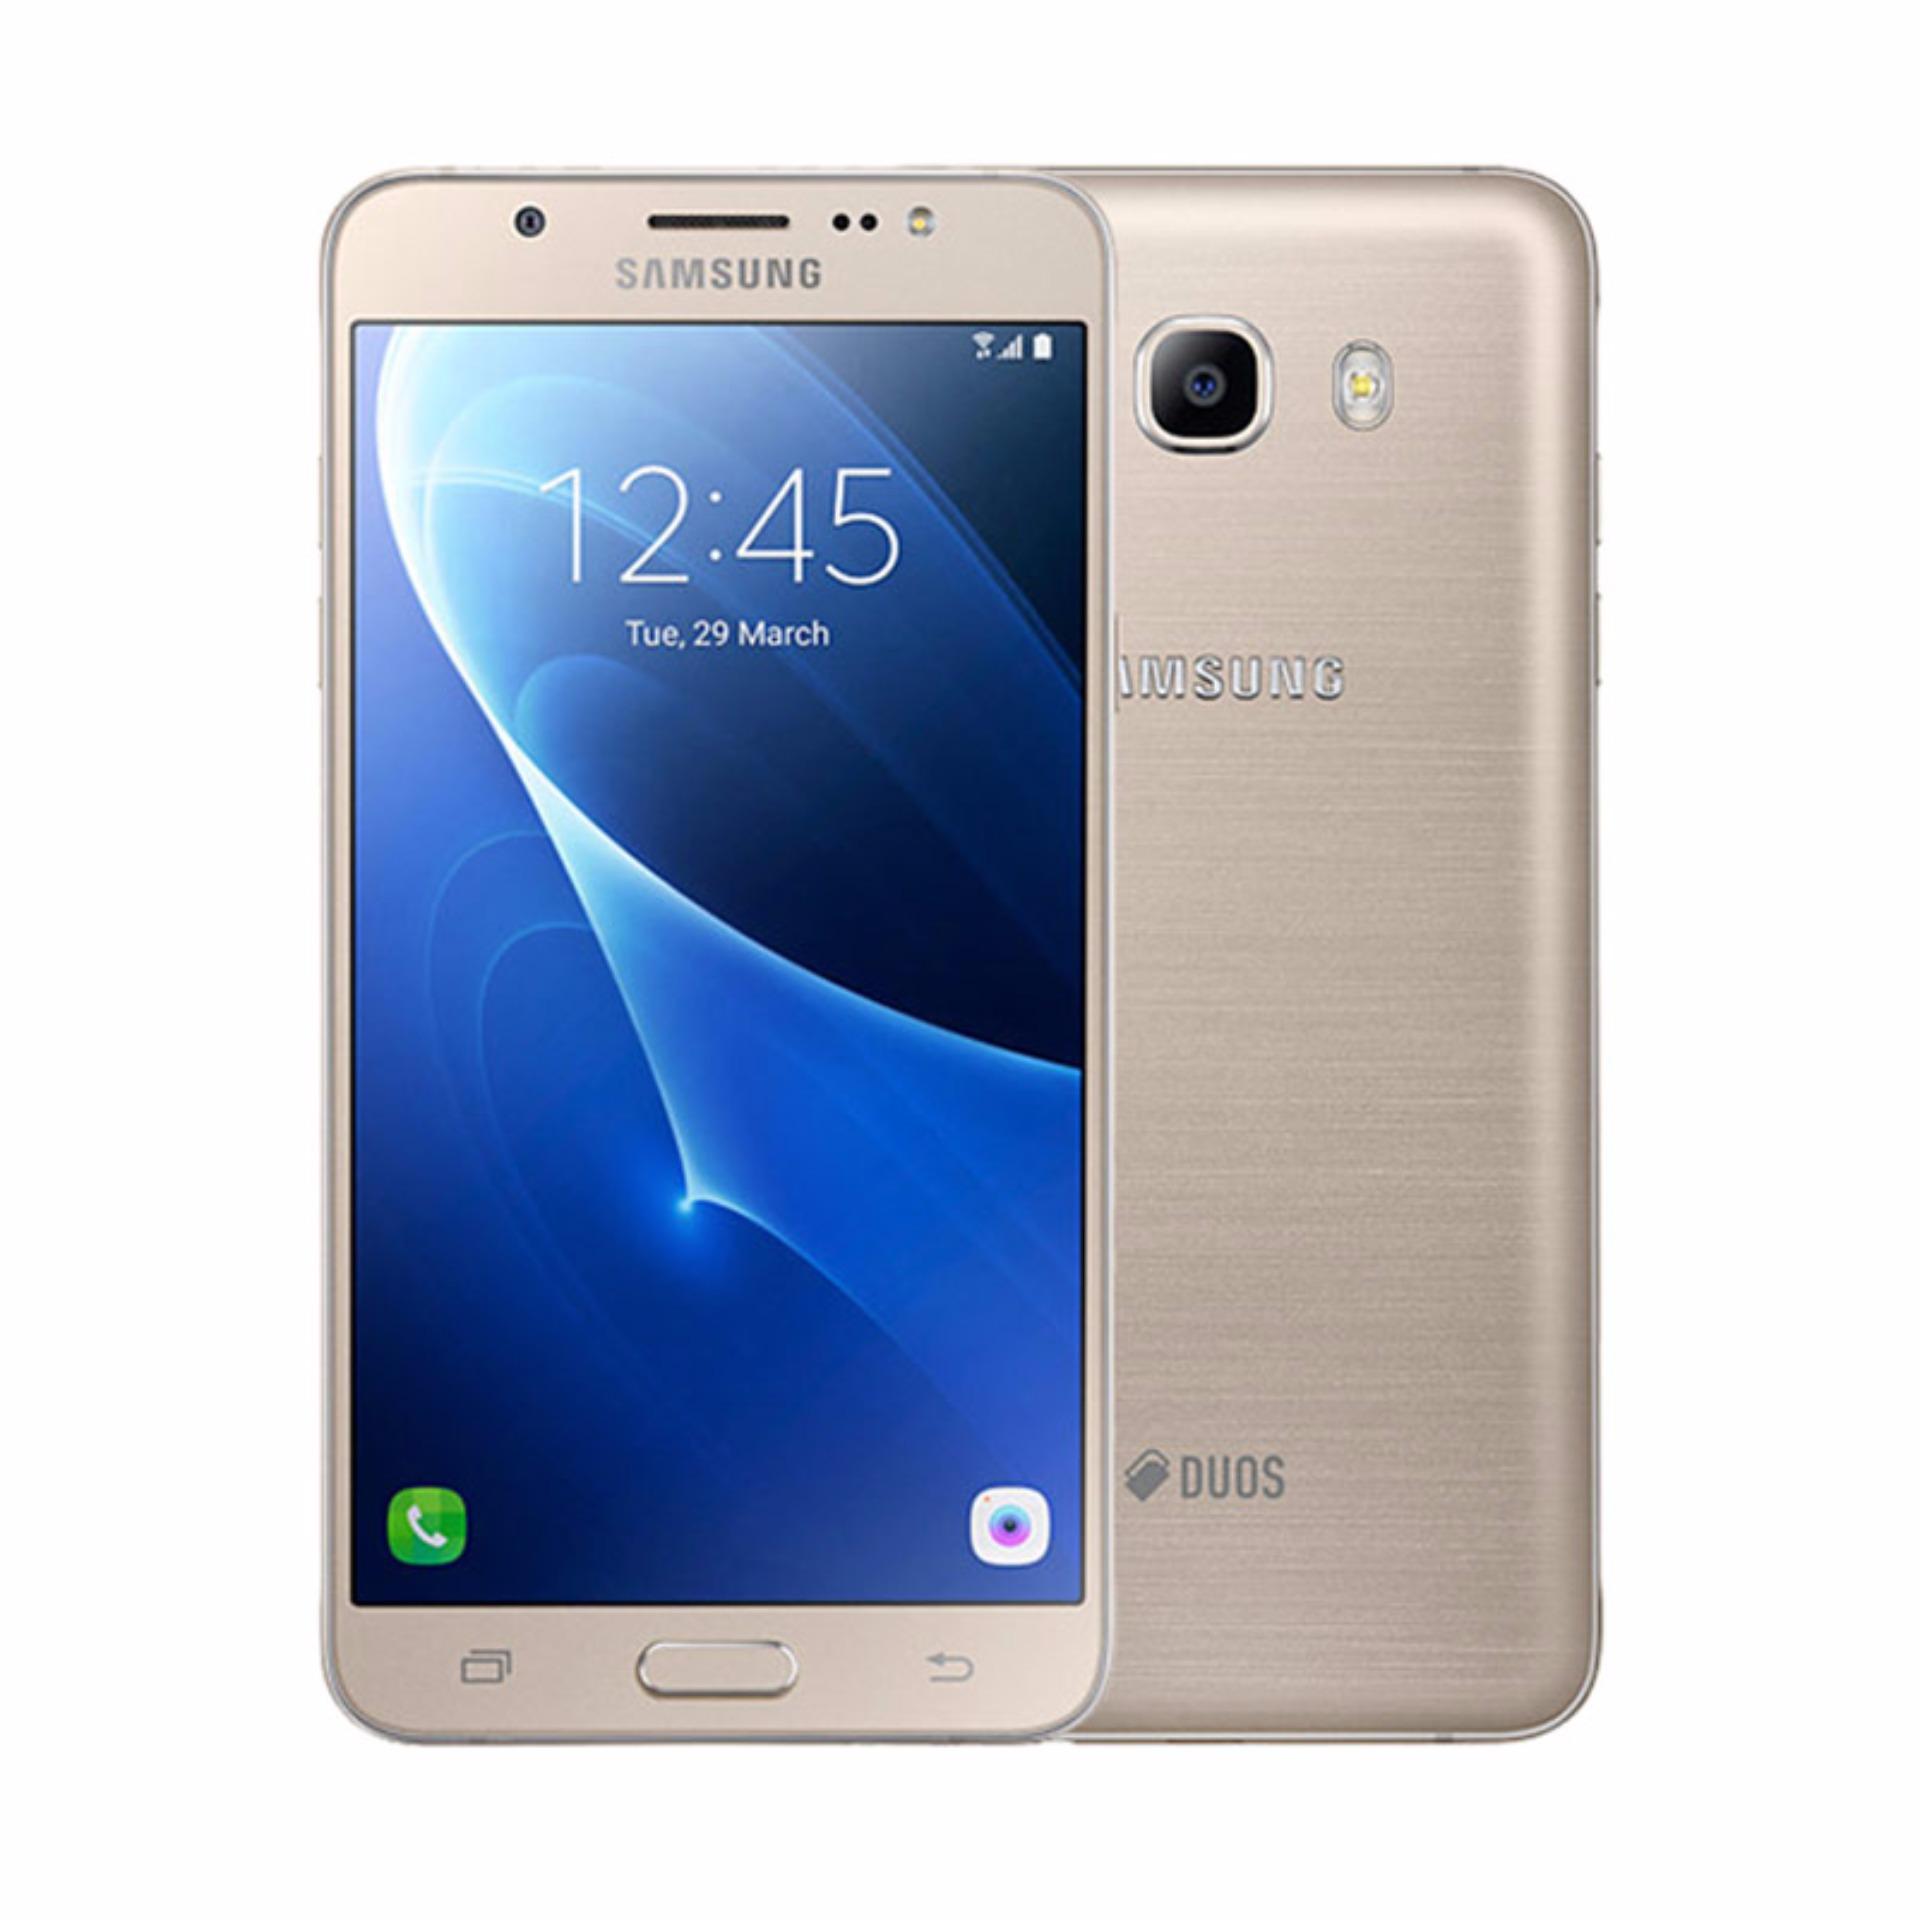  Samsung Galaxy J7 2016 Smartphone - [16 GB]   